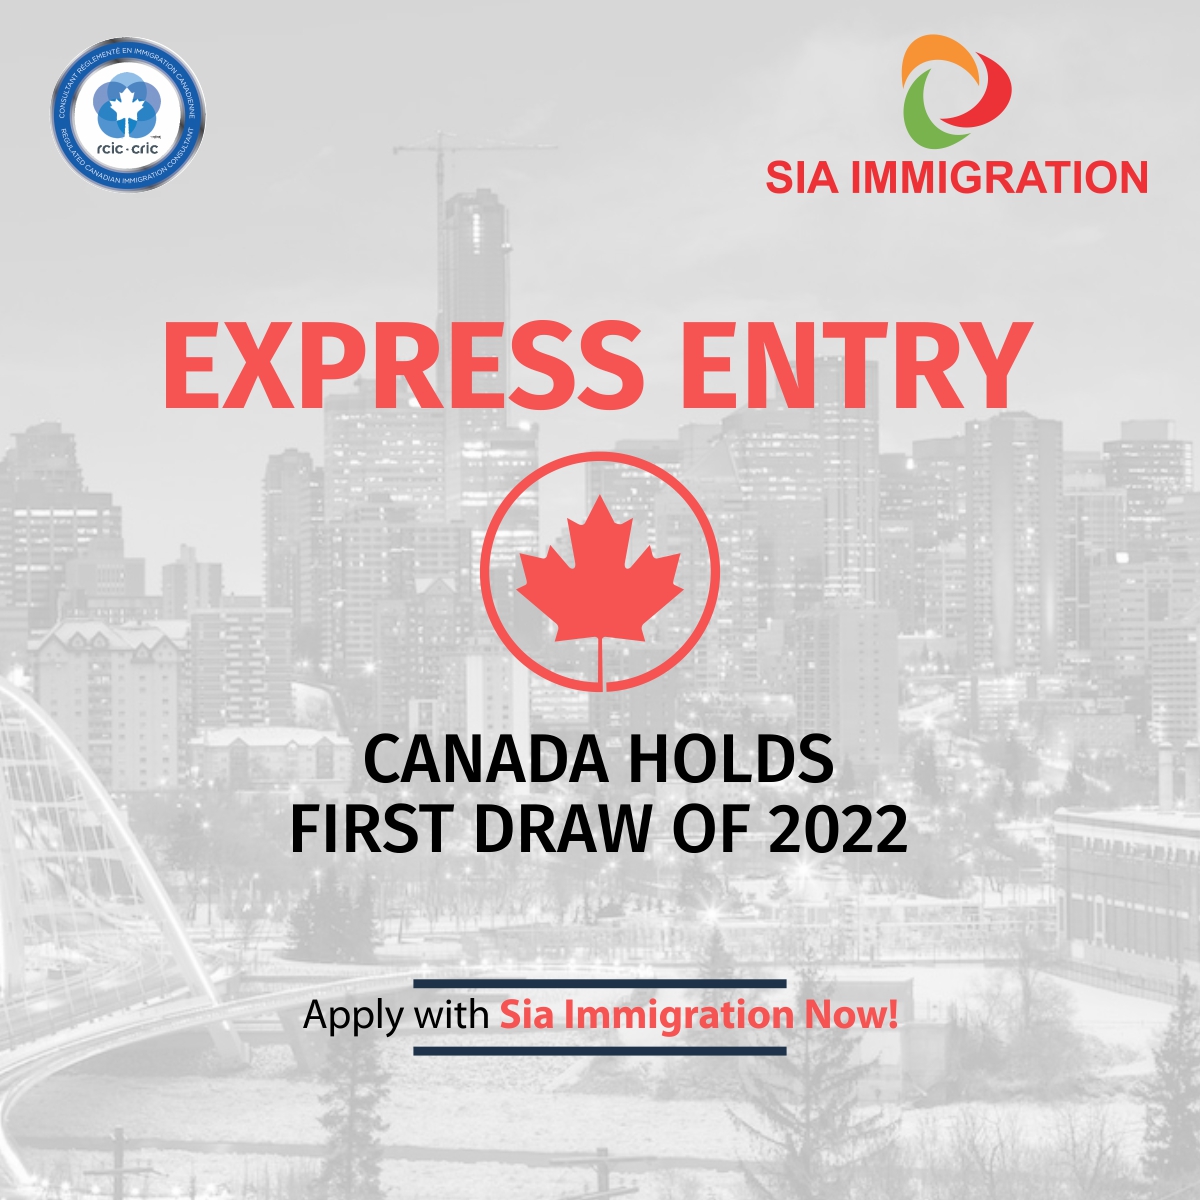 New Express Entry draw invites 3,350 candidates to apply PR-saigonsouth.com.vn